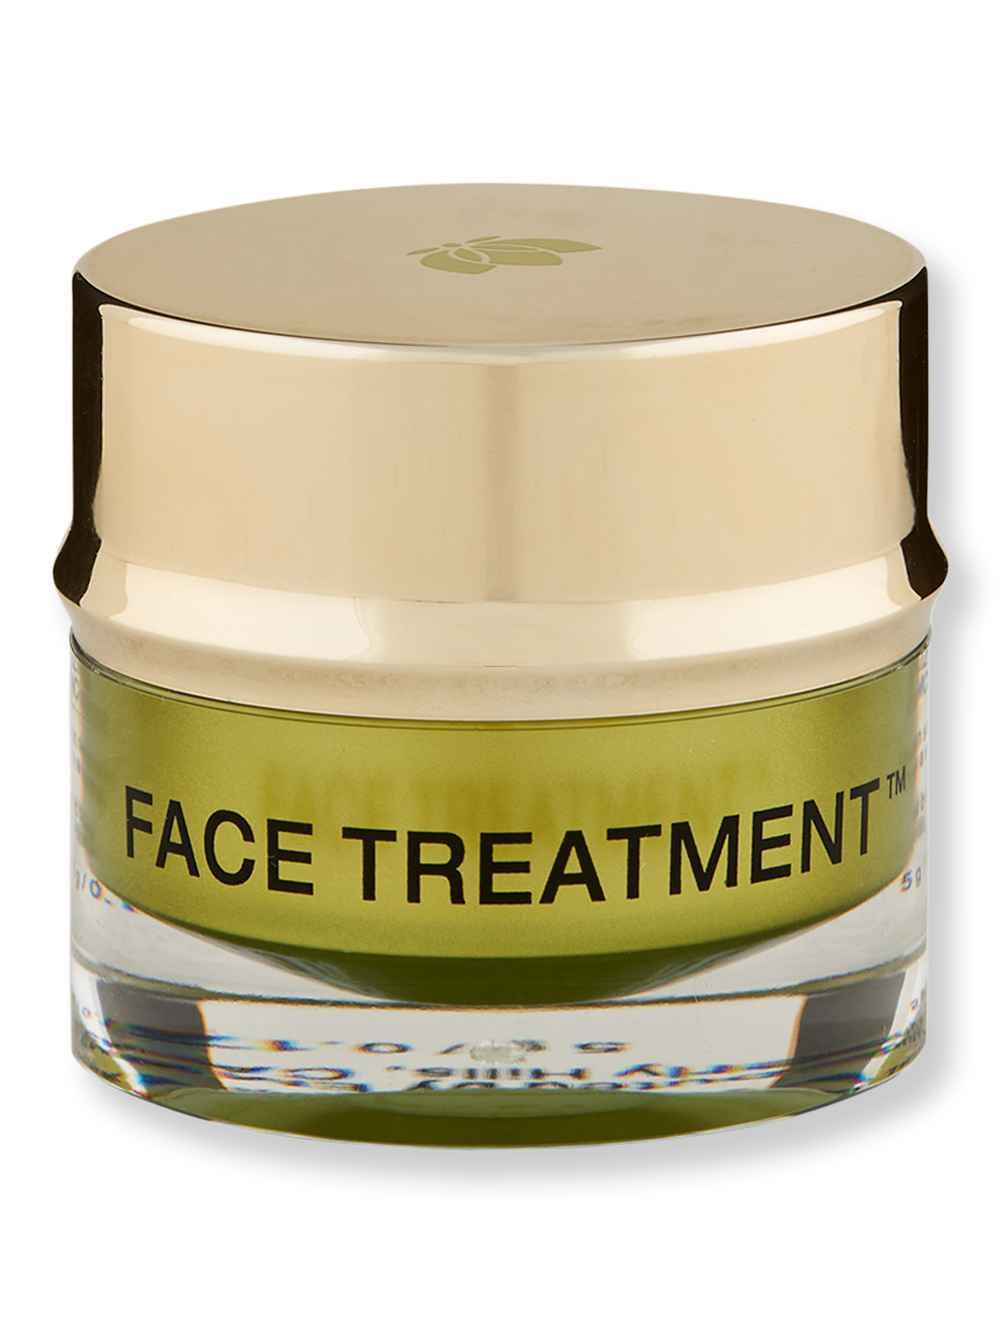 EMK Skin Care EMK Skin Care Face Treatment 0.16 oz4.6 gr Skin Care Treatments 